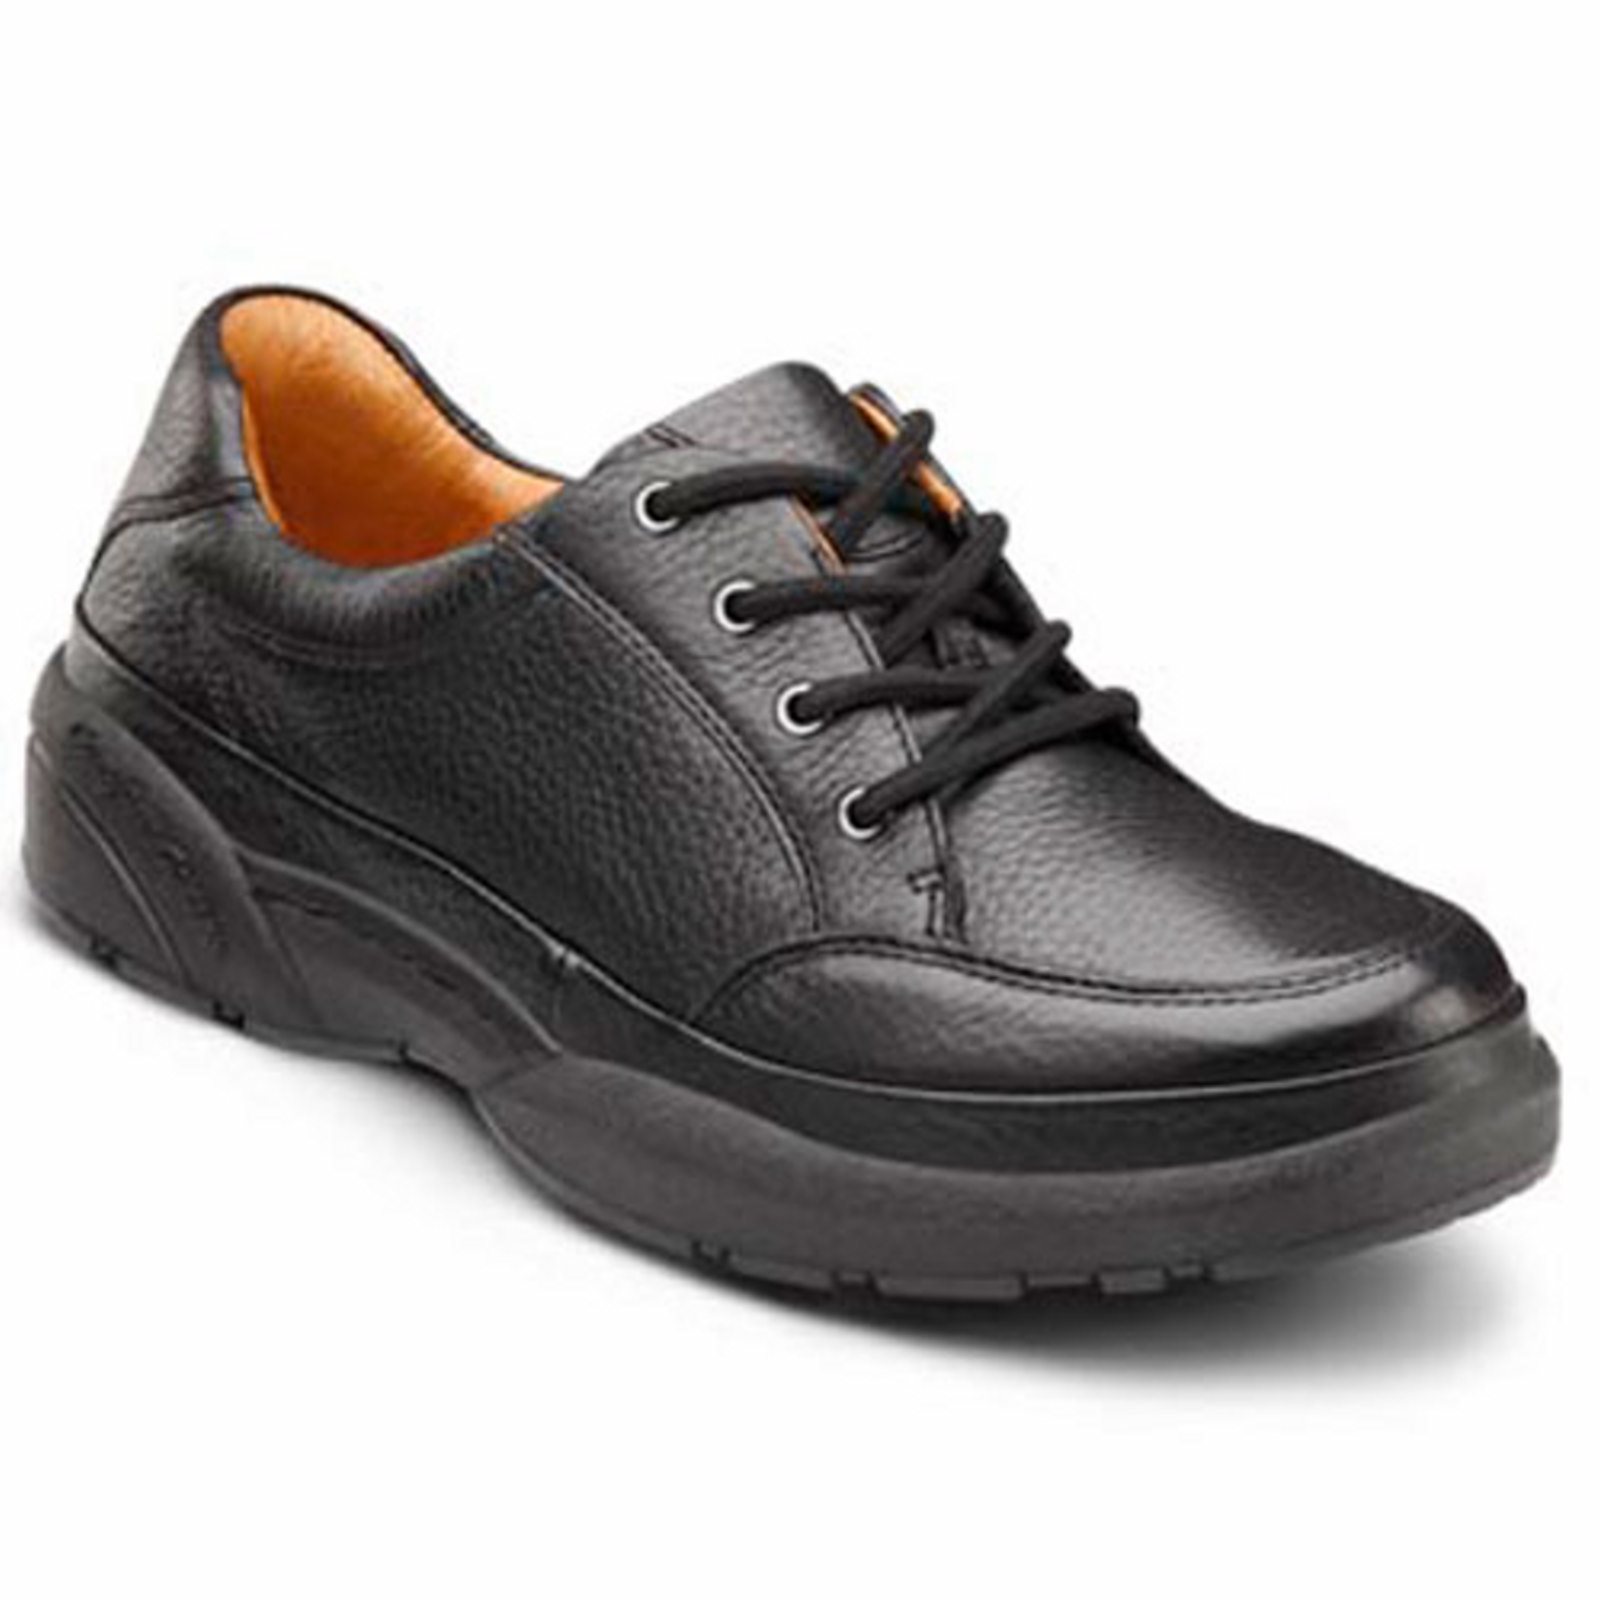 Dr. Comfort Justin Men's Casual Shoe: 8.5 Wide (E/2E) Black Lace - image 1 of 5